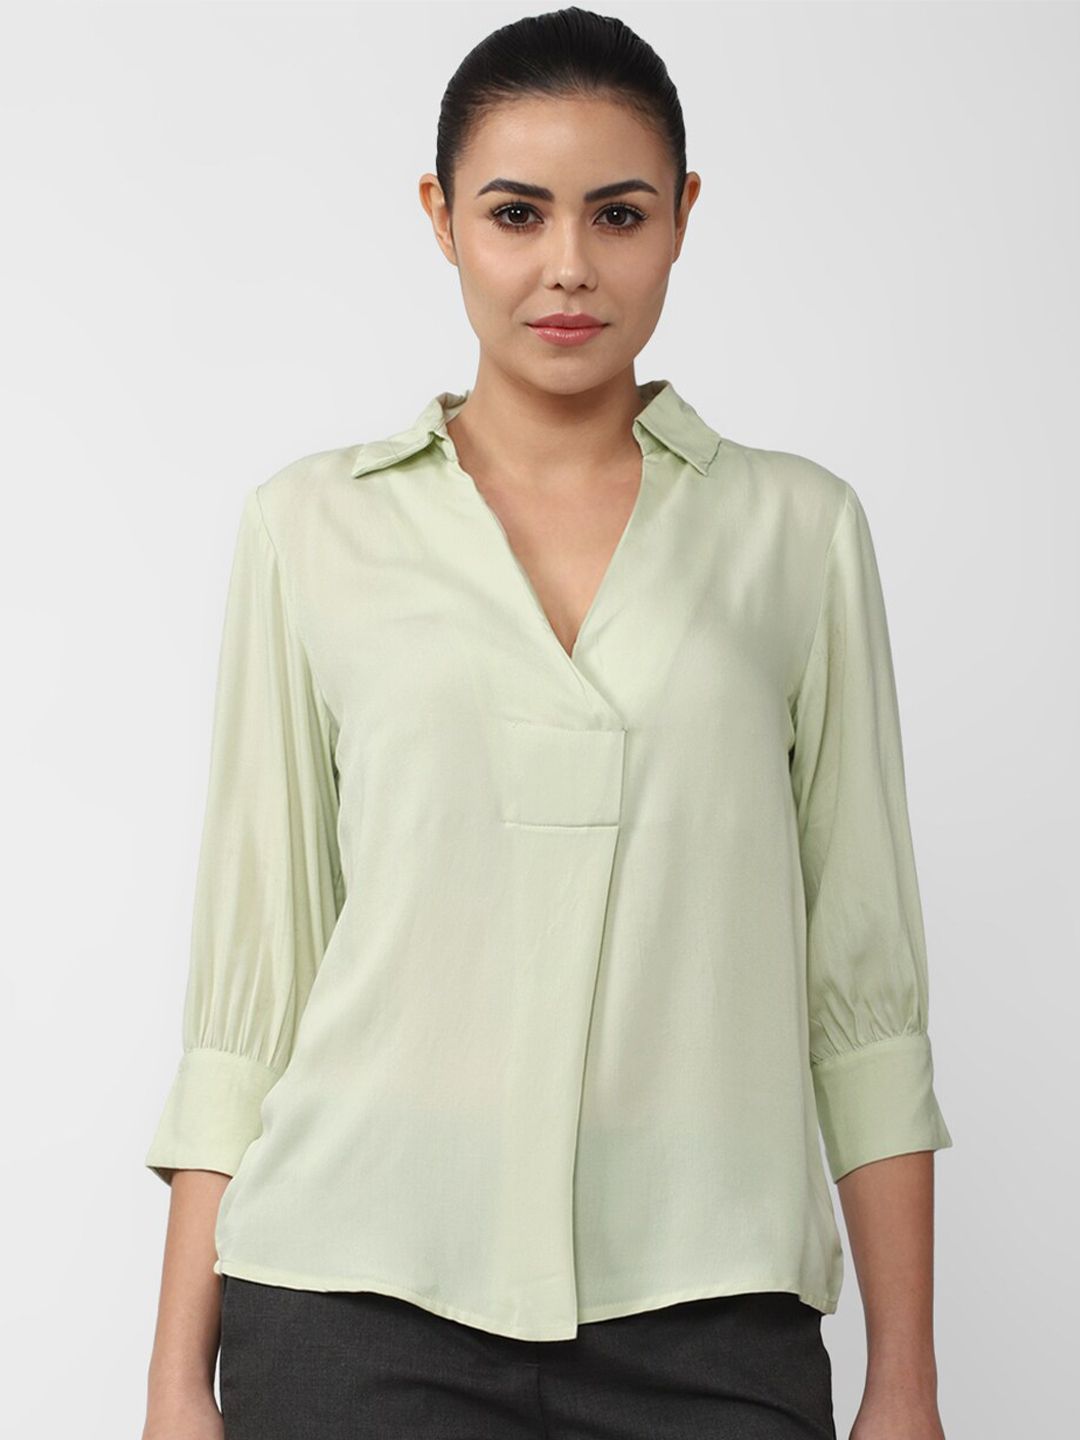 Van Heusen Woman Green Shirt Style Top Price in India